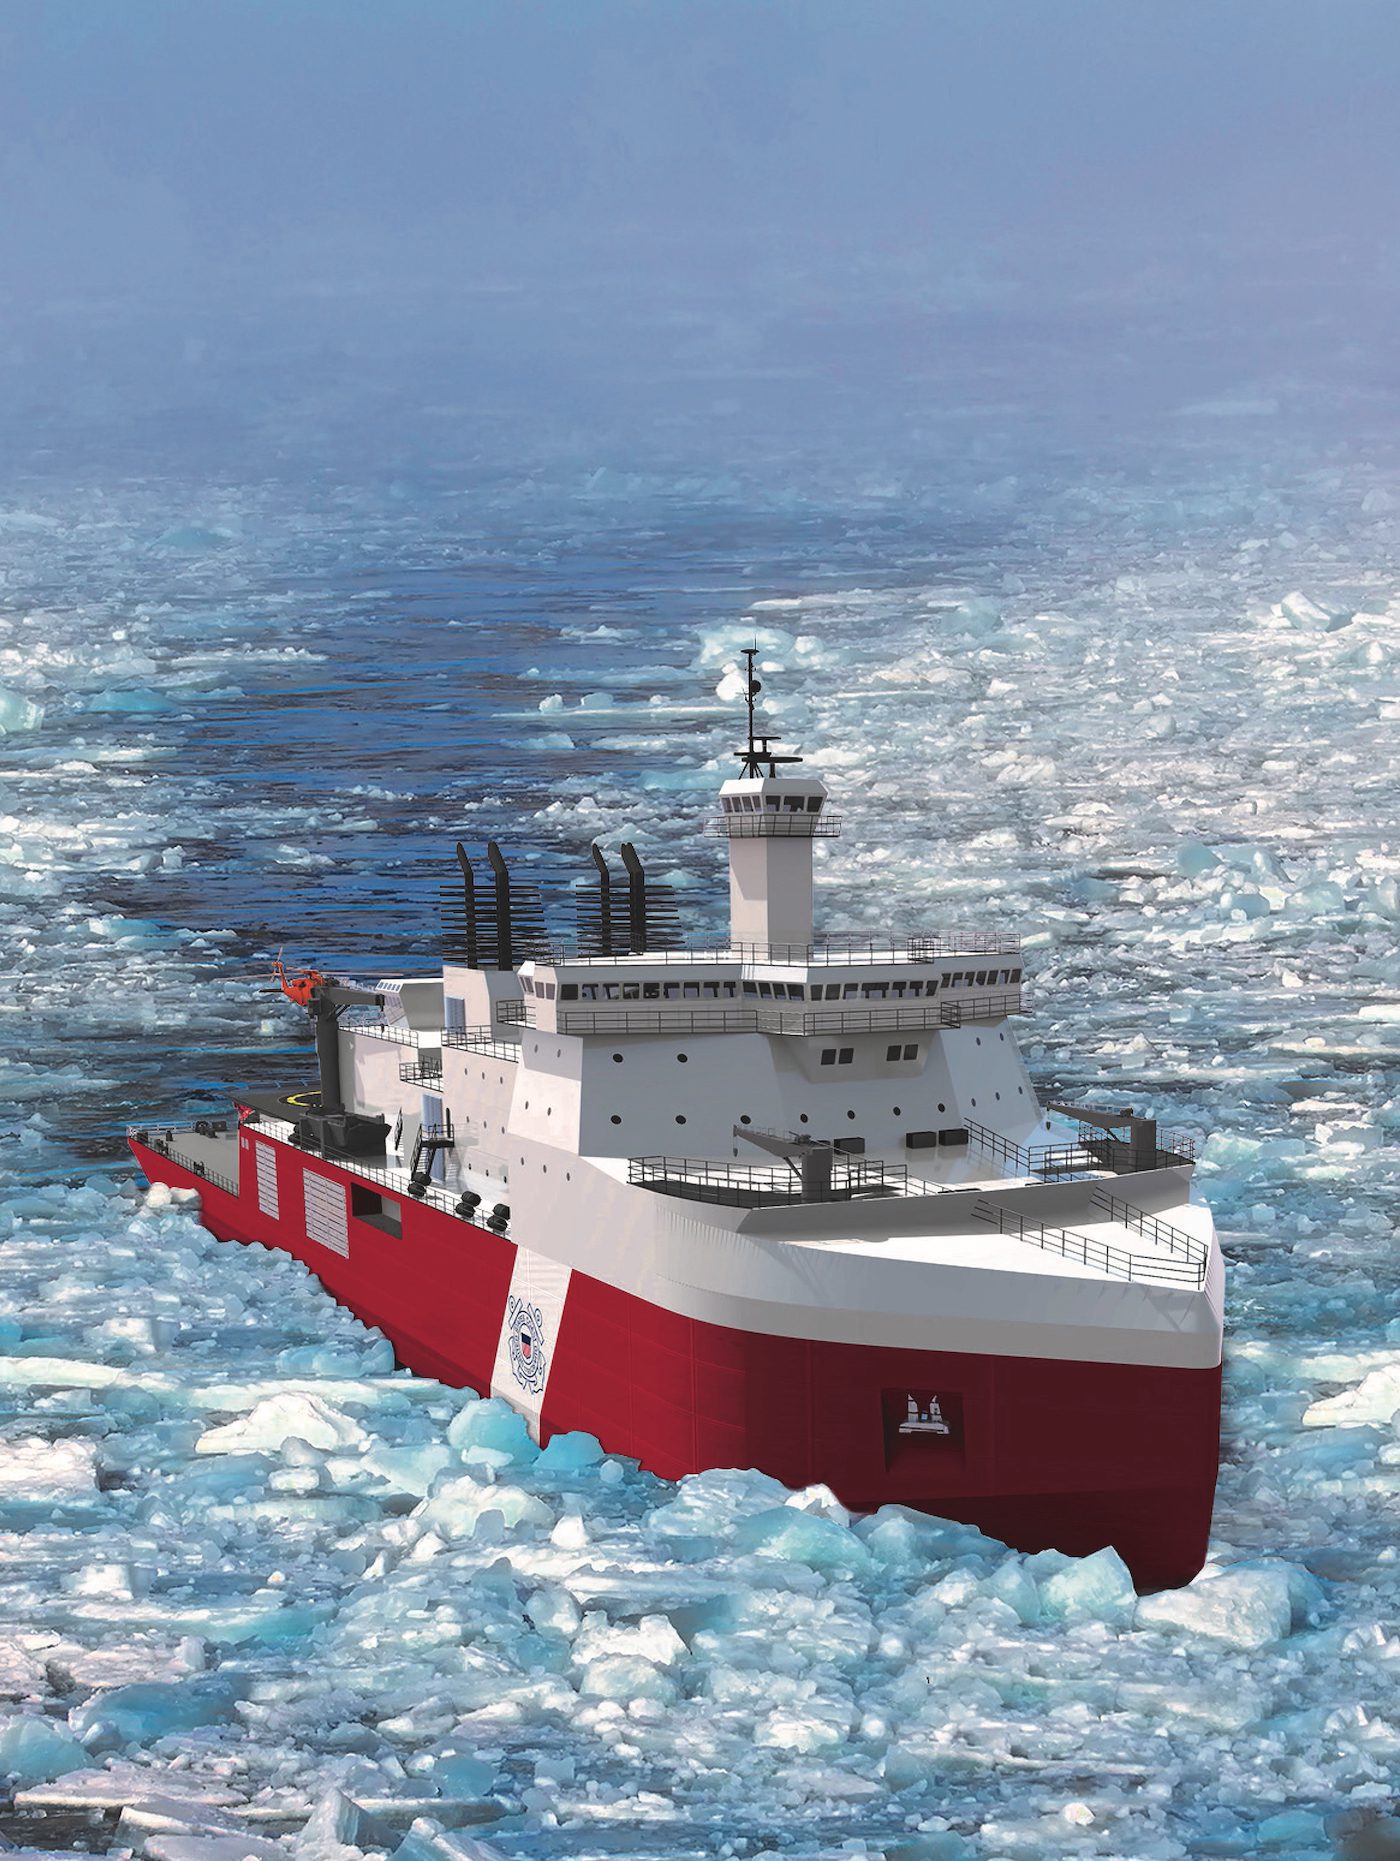 Vestdavit wins contract for new U.S. Coast Guard icebreaker